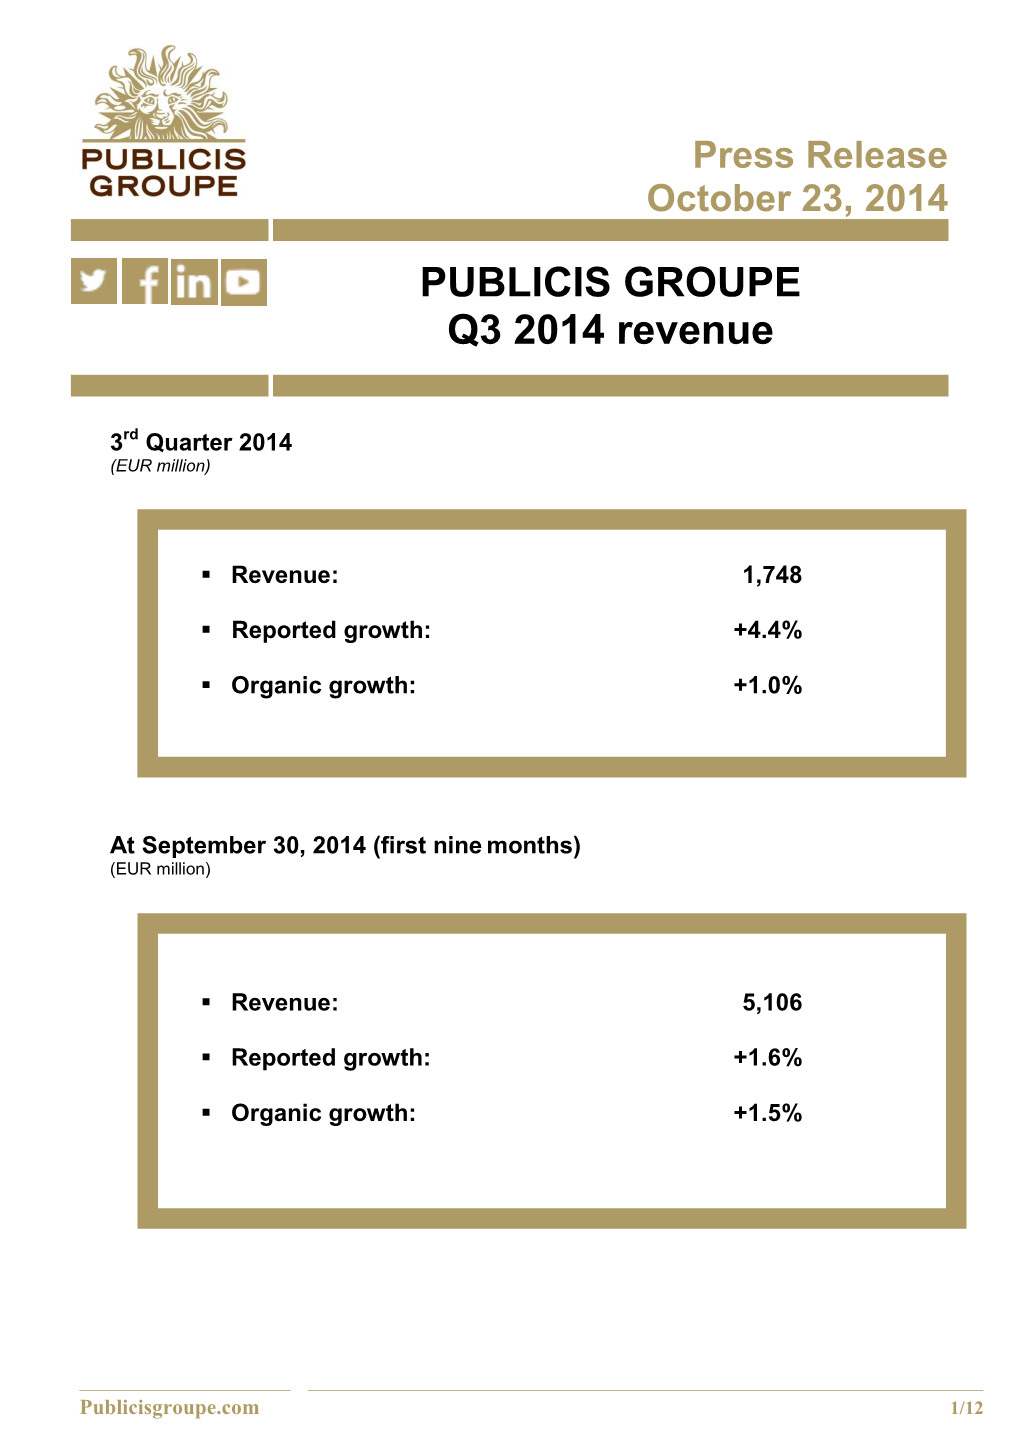 PUBLICIS GROUPE Q3 2014 Revenue